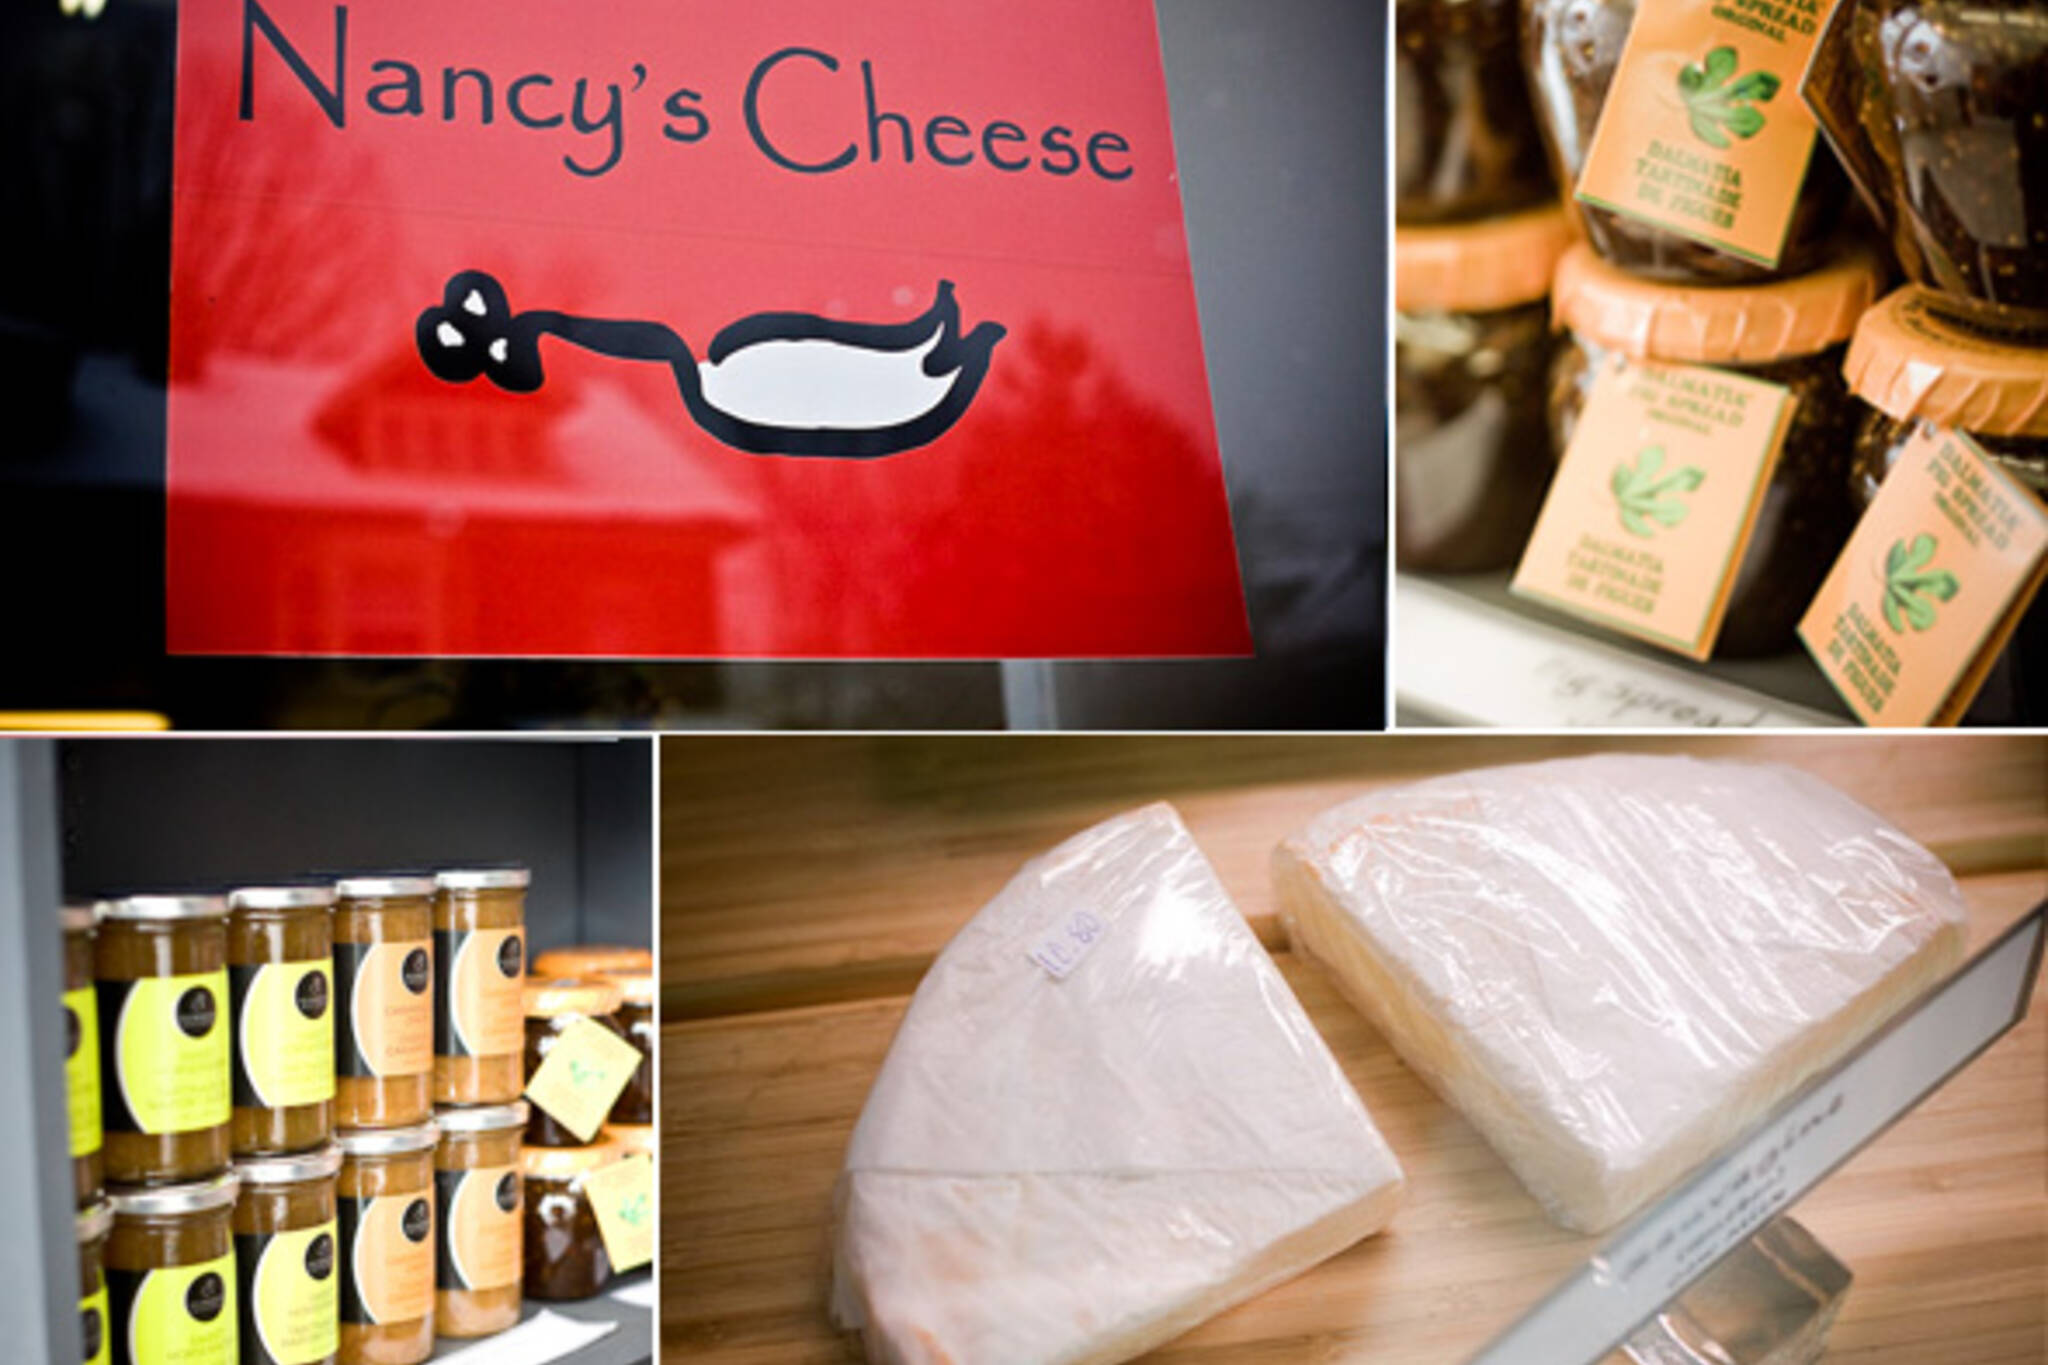 Nancy's Cheese